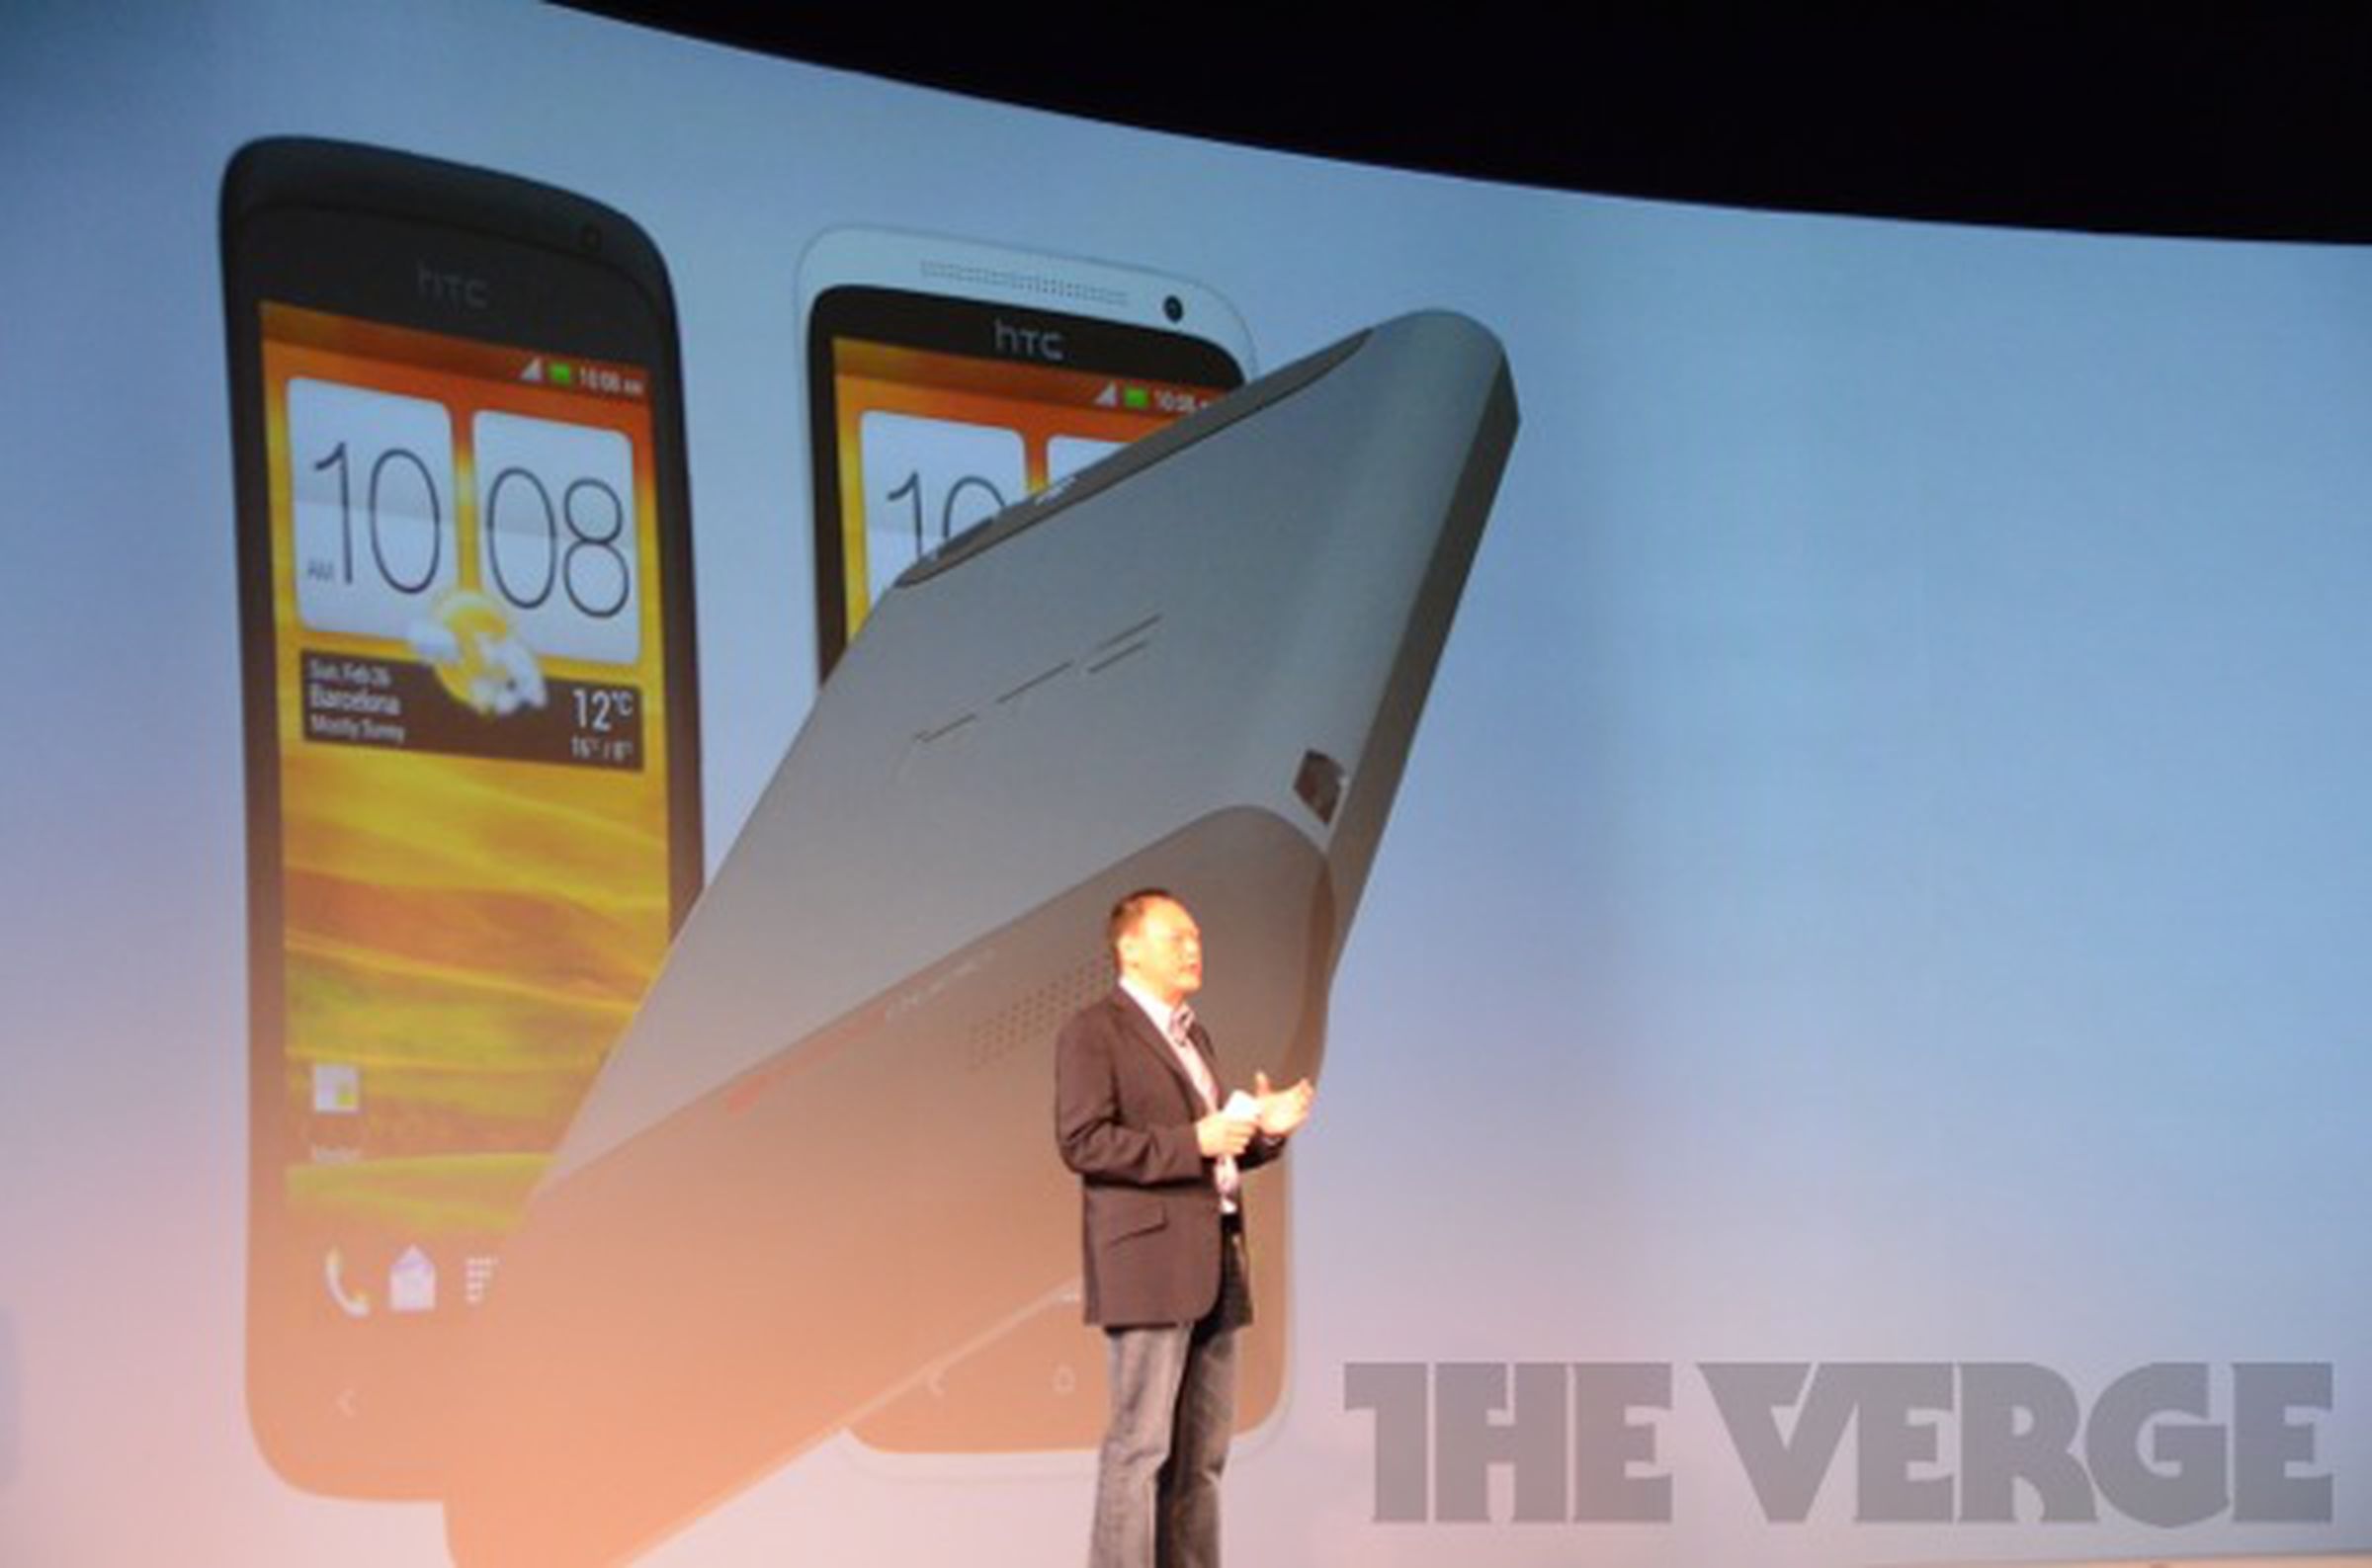 HTC One V announcement photos